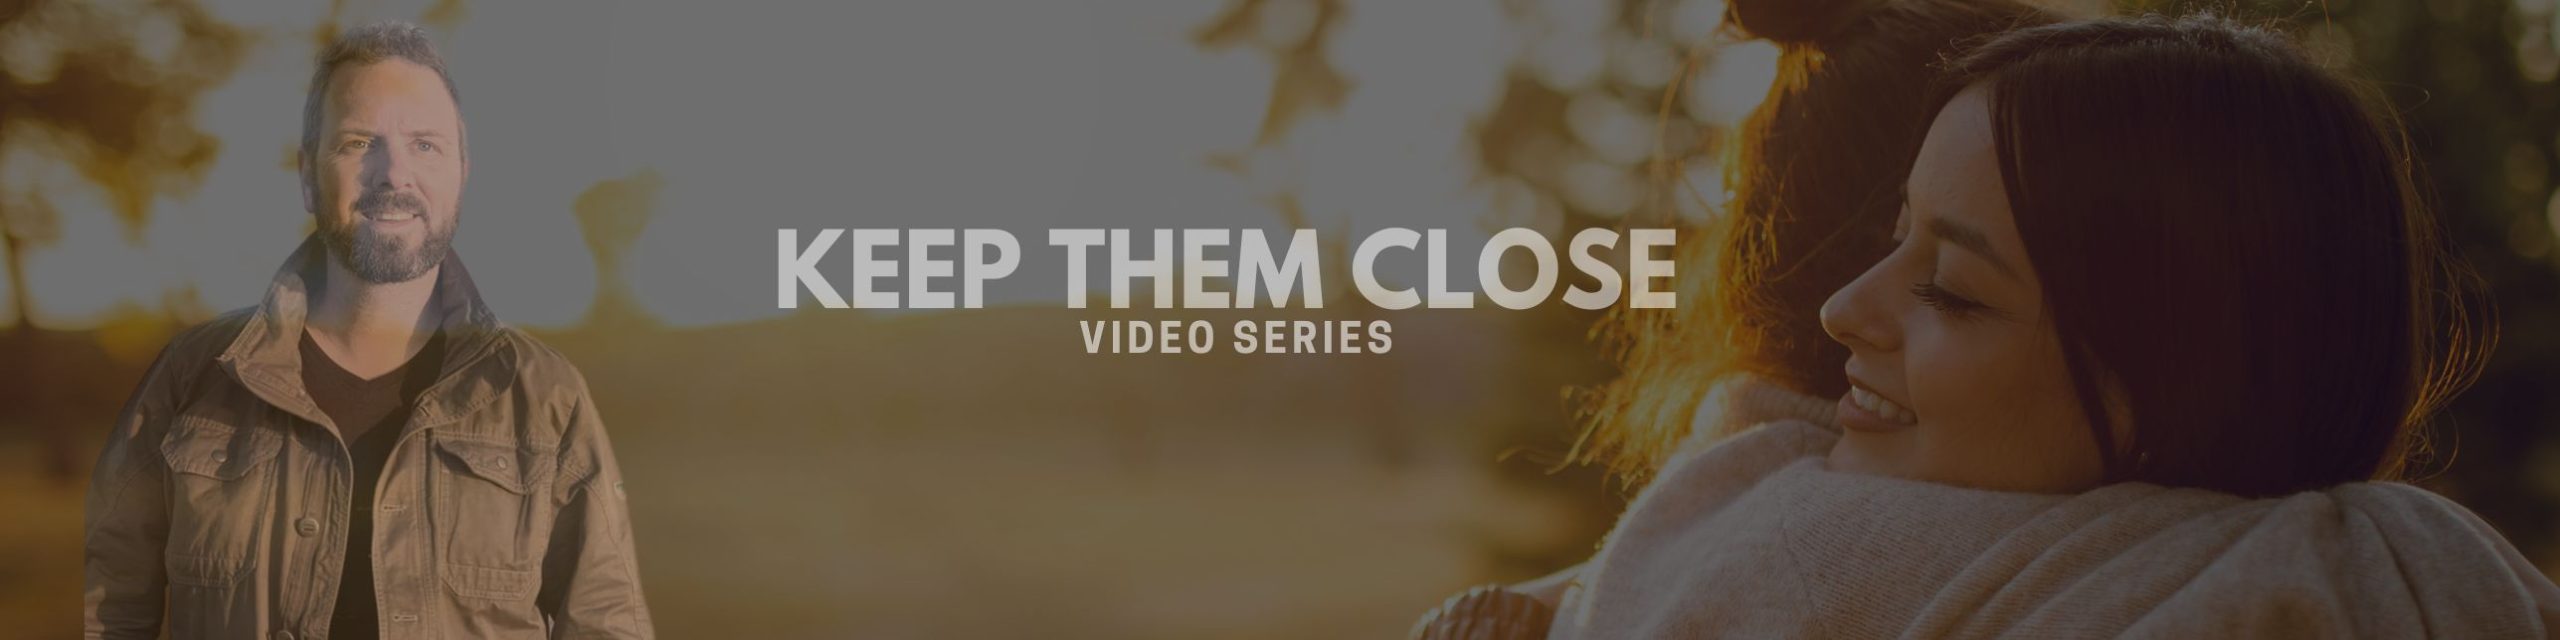 Keep Them Close Video Series